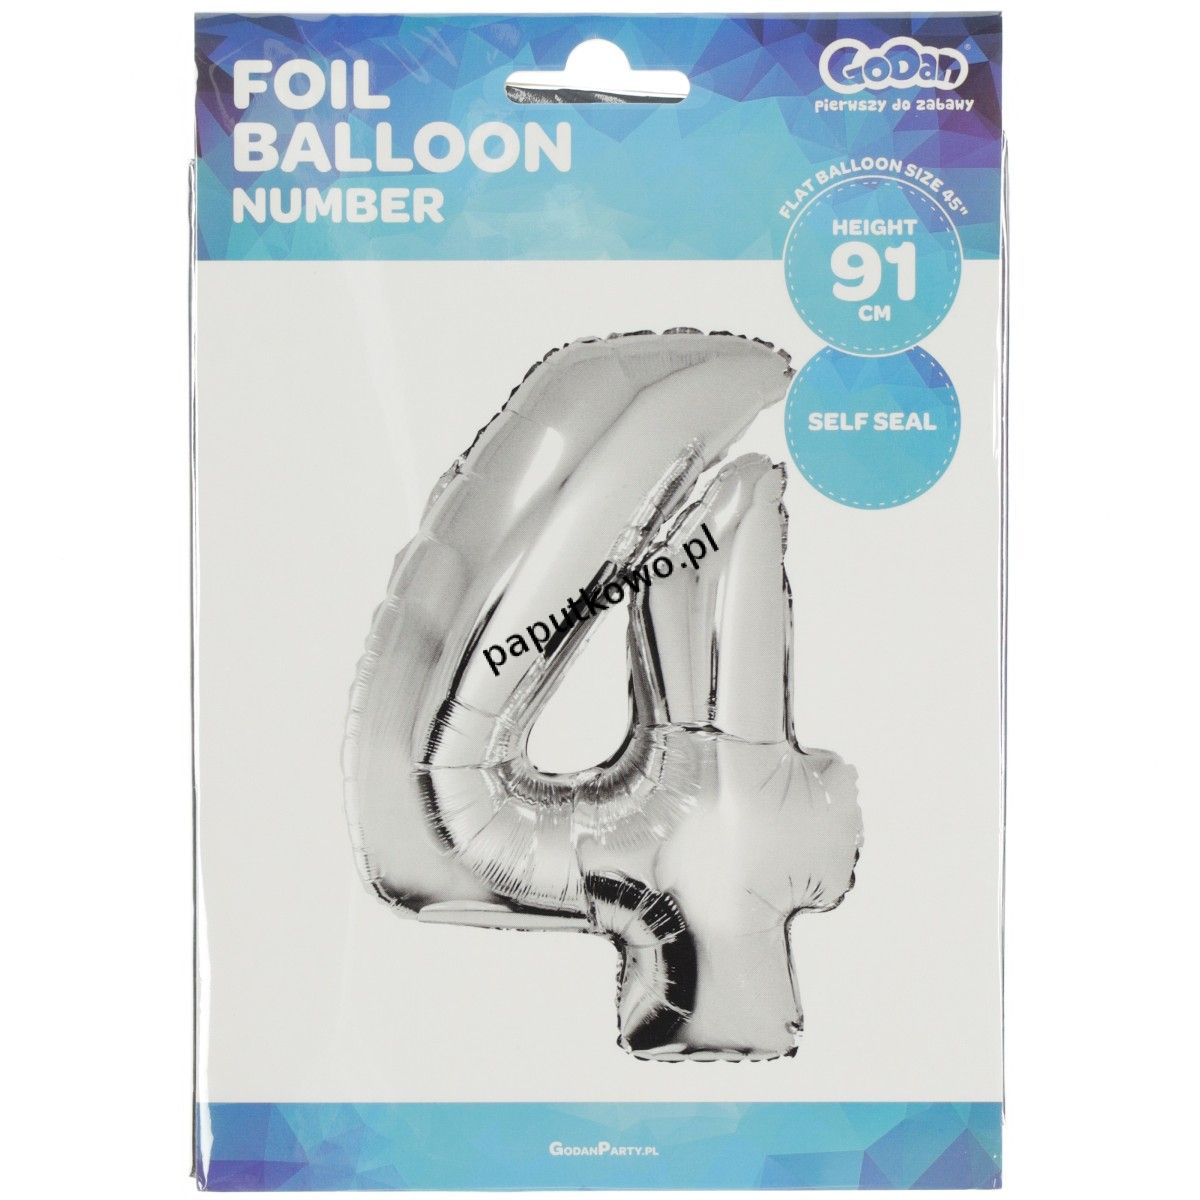 Balon foliowy Godan 85cal (FG-C85S4)